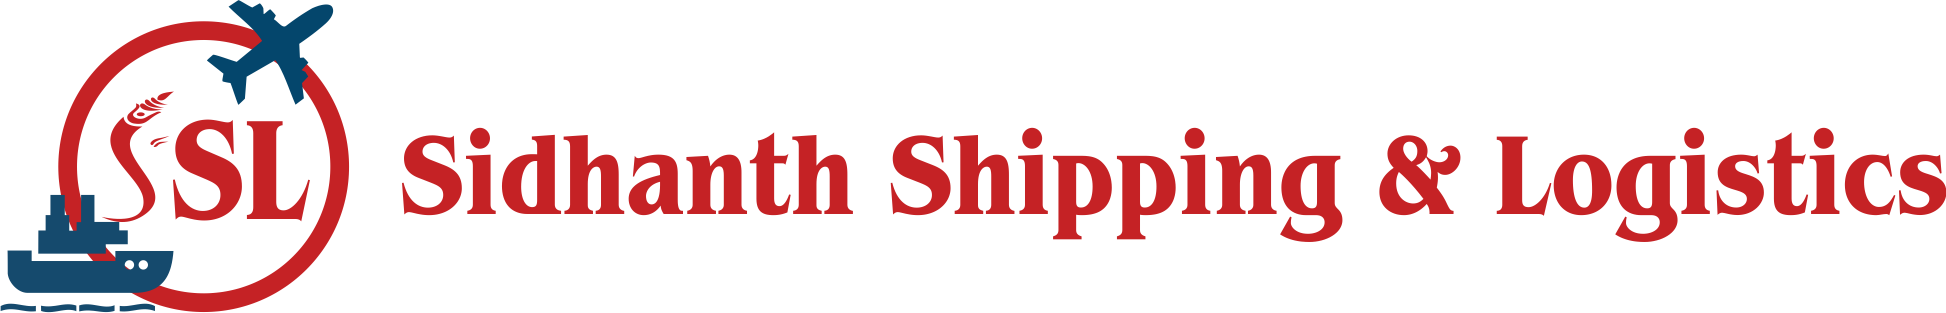 Sidhanth Shipping & Logistics